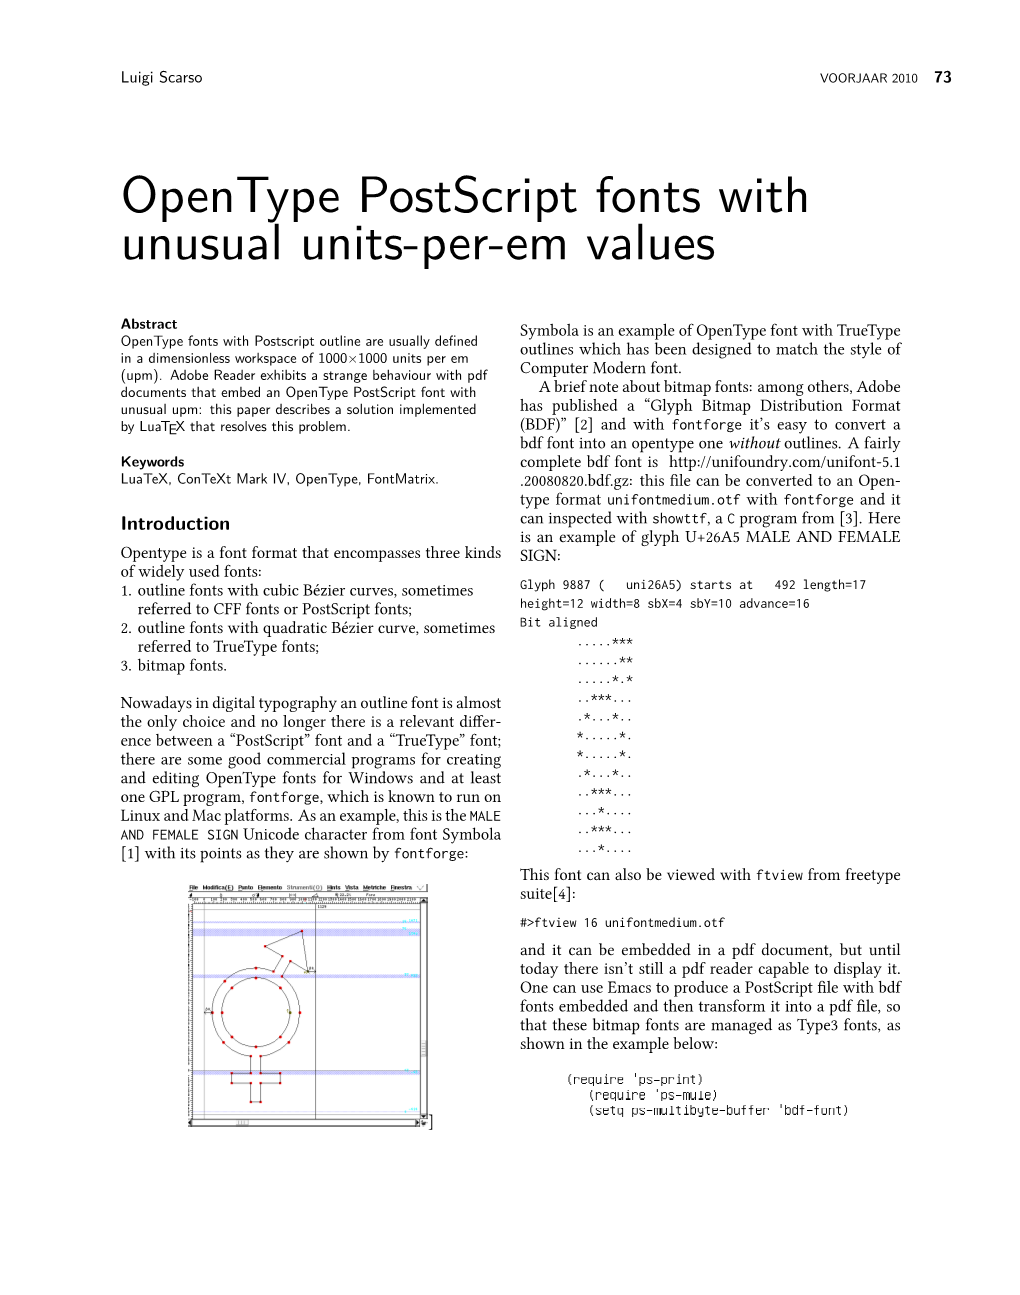 Opentype Postscript Fonts with Unusual Units-Per-Em Values